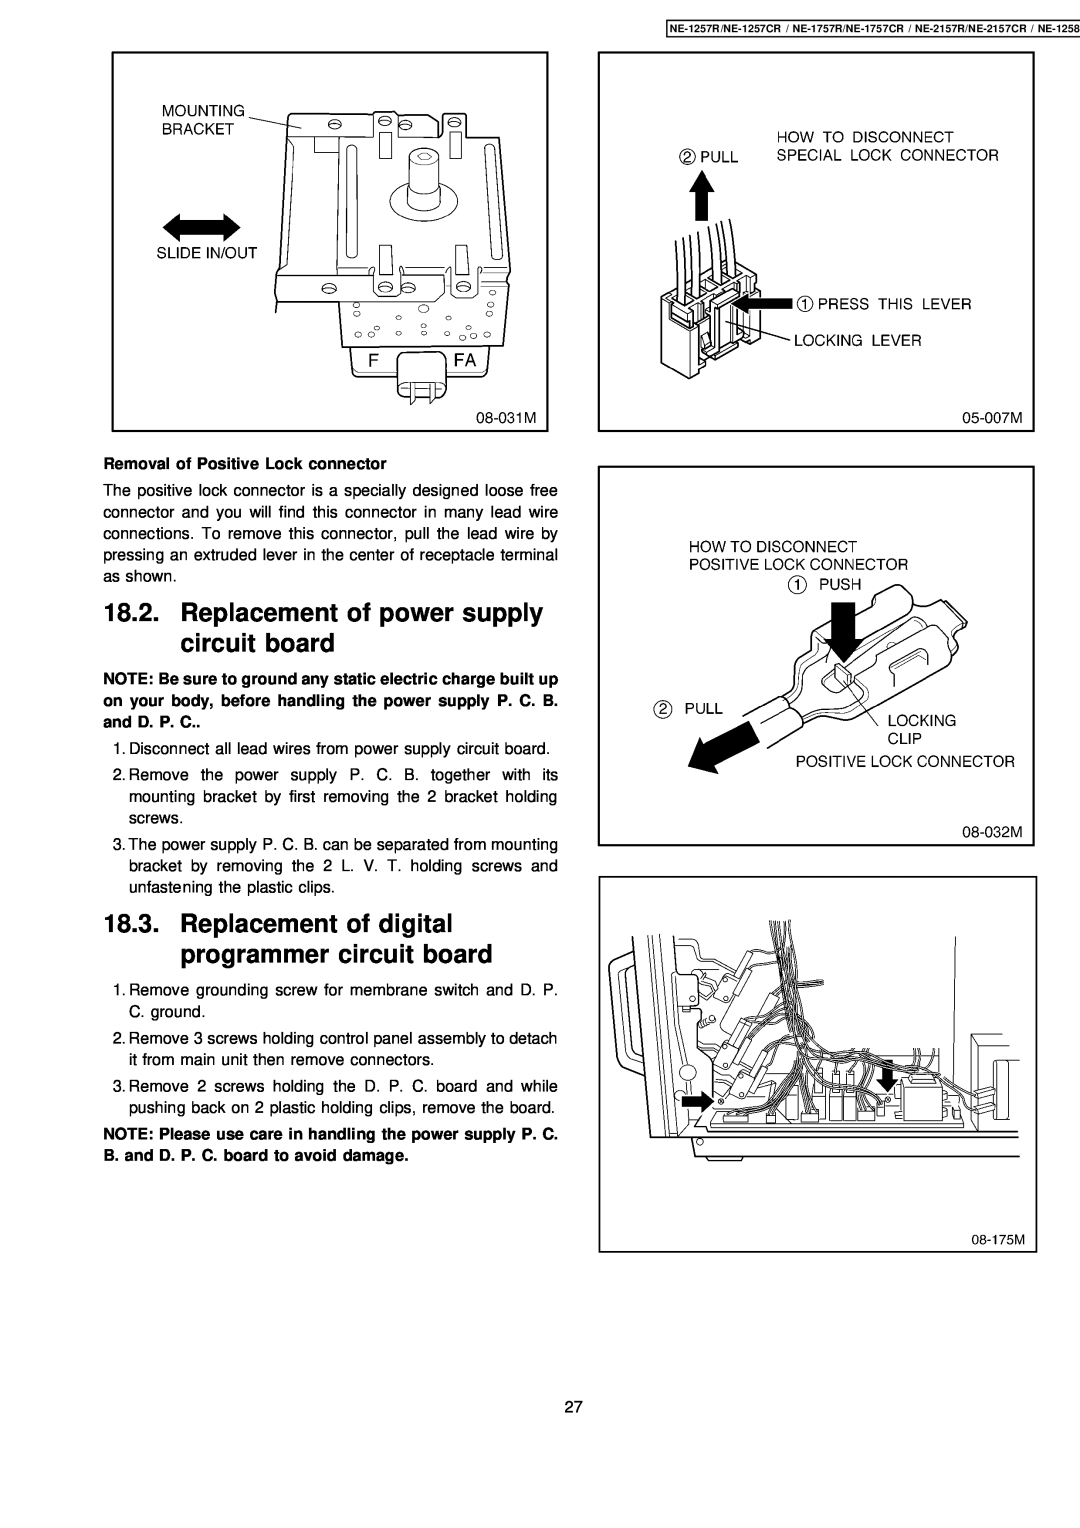 Panasonic NE-2157CR, NE-1757CR, NE-1257CR Replacement of power supply circuit board, Removal of Positive Lock connector 